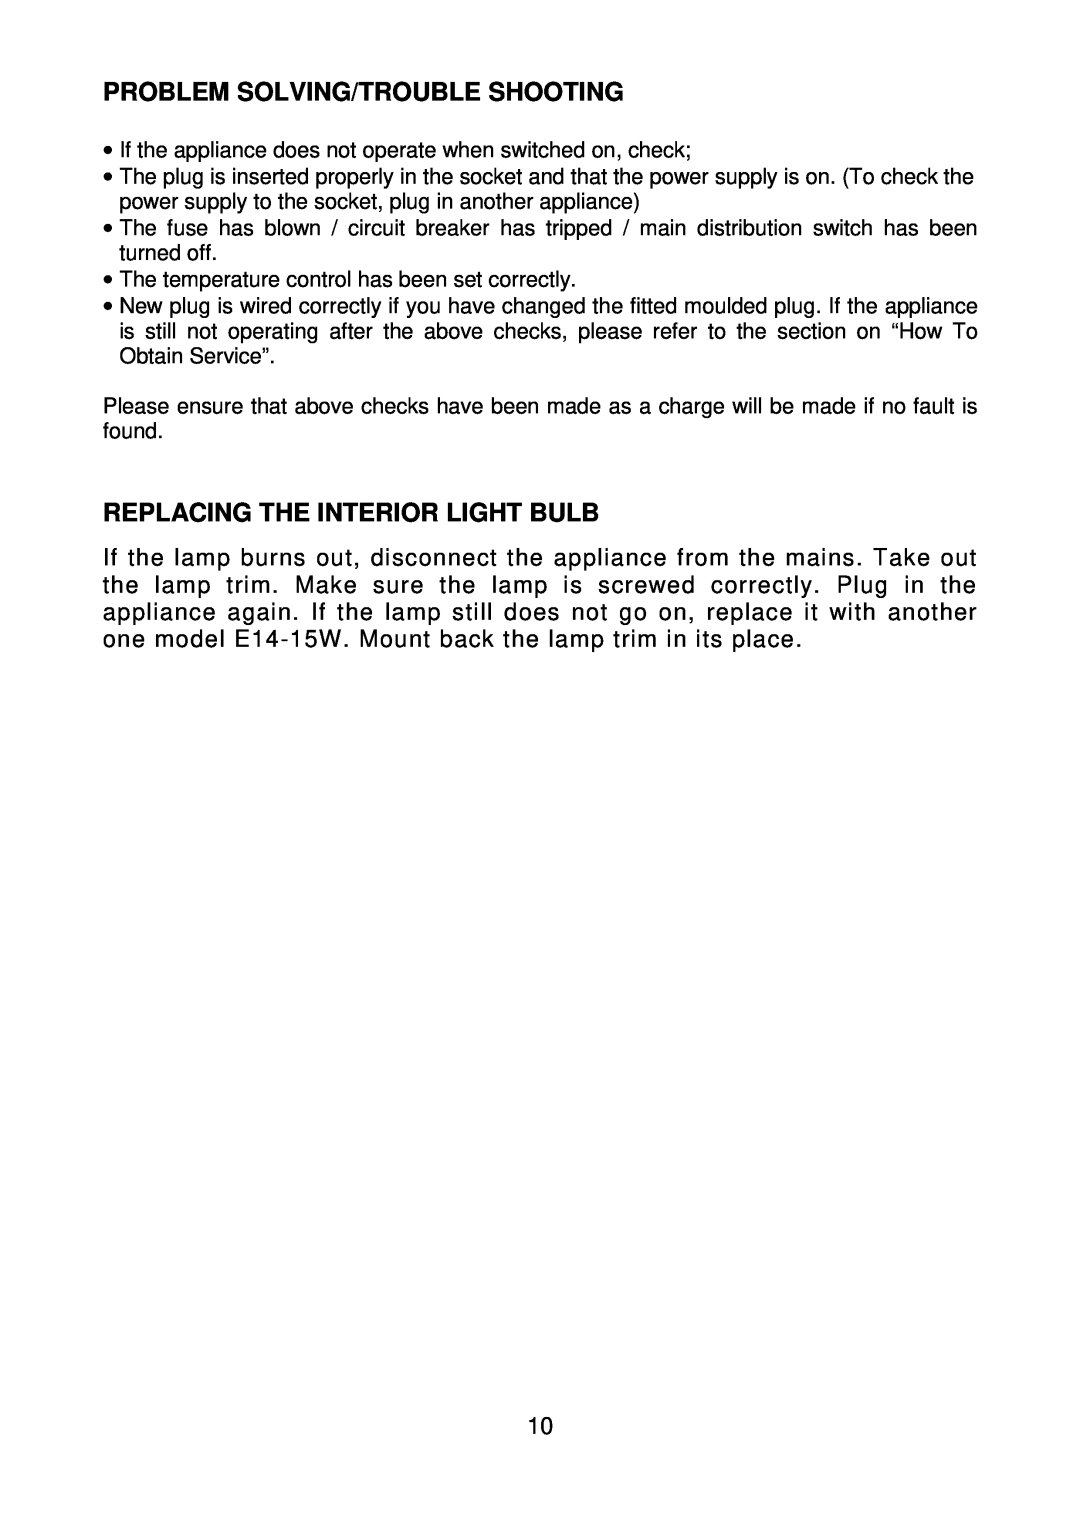 Beko CFA1300W manual Problem Solving/Trouble Shooting, Replacing The Interior Light Bulb 